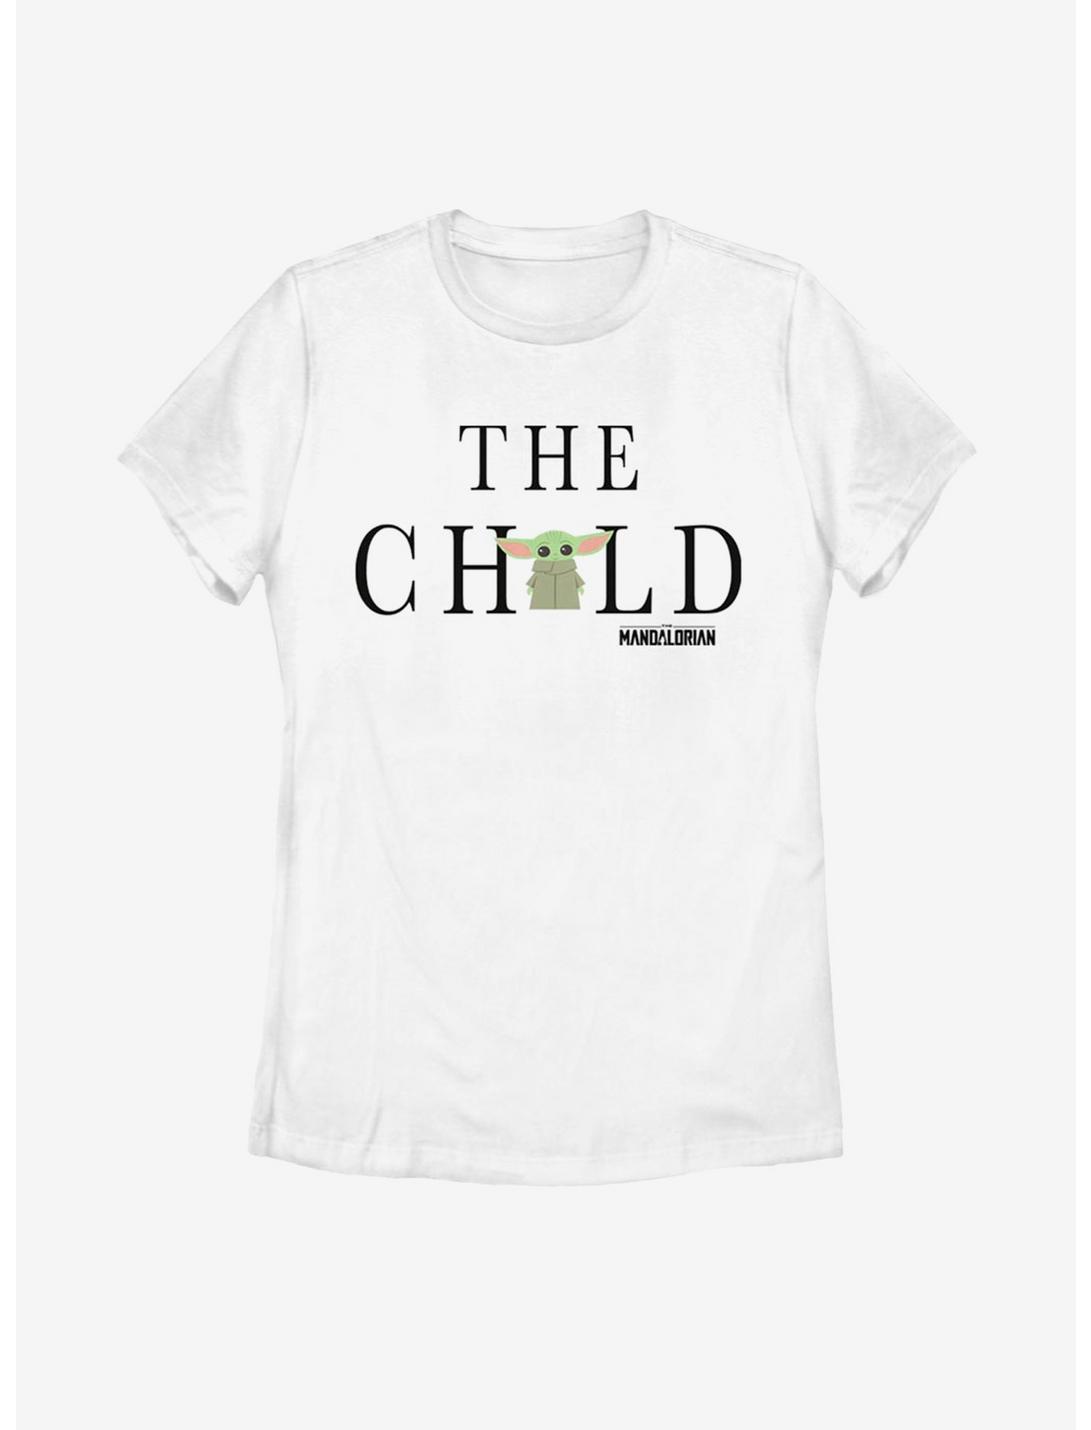 Star Wars The Mandalorian The Child Text Womens T-Shirt, WHITE, hi-res